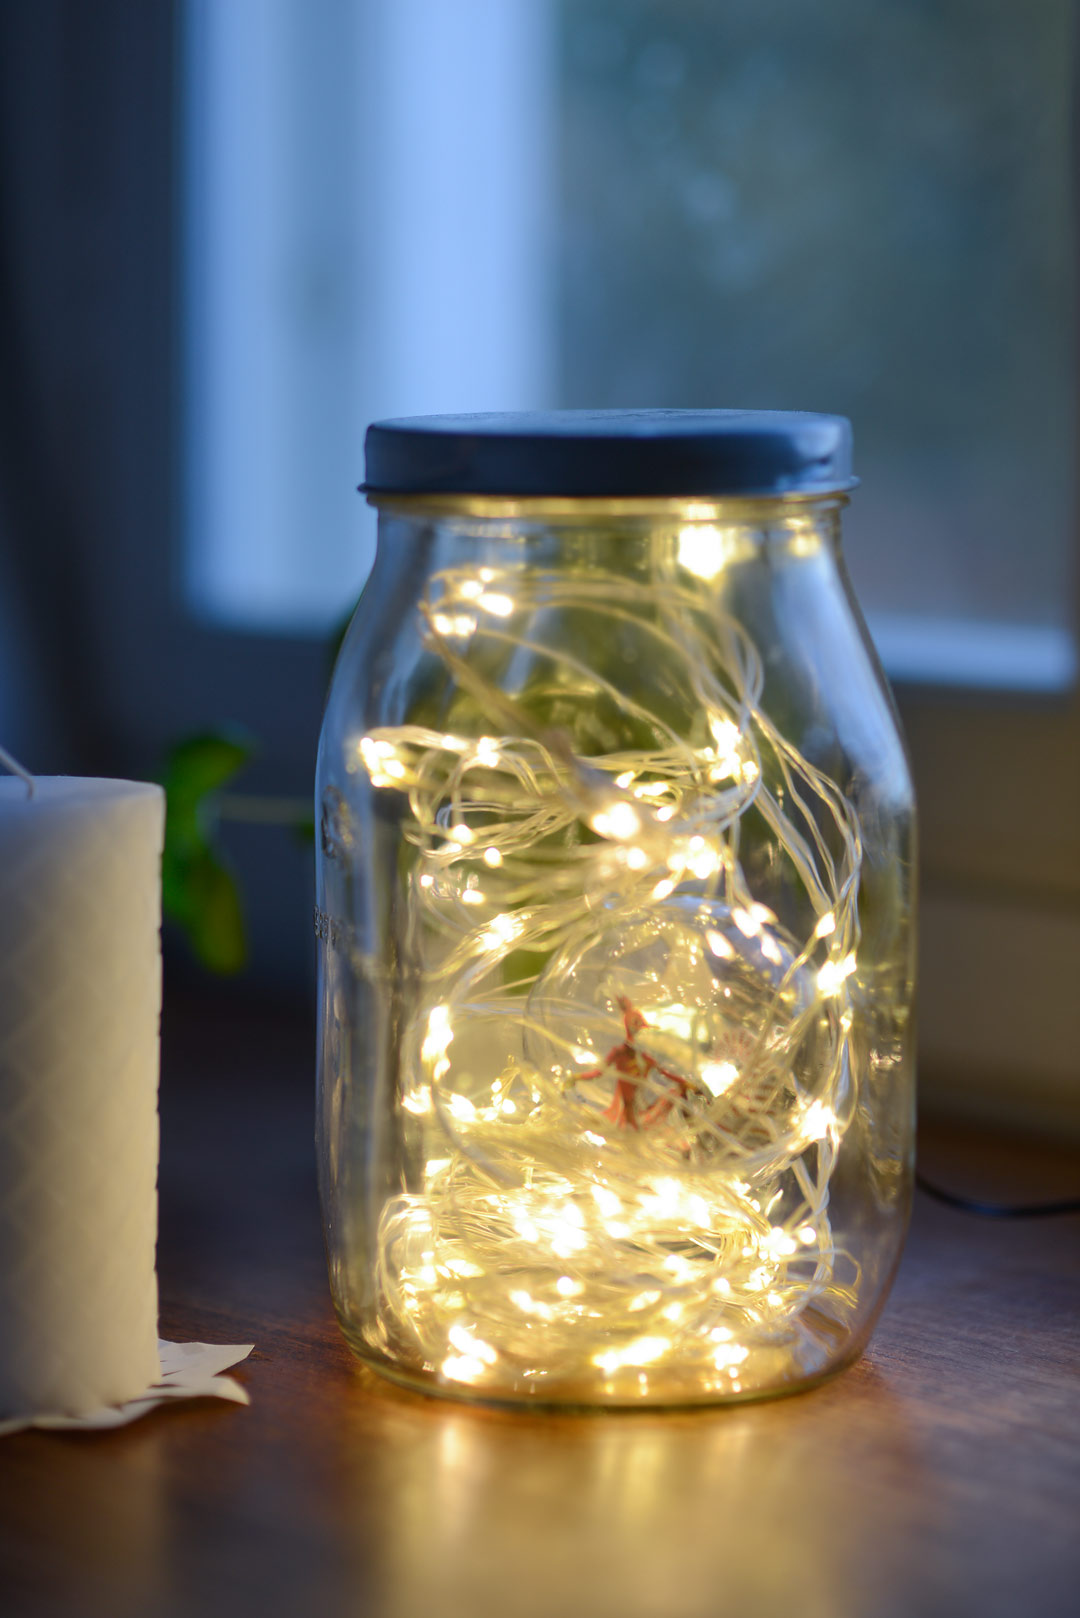 Fairy lights in a vintage glass jar